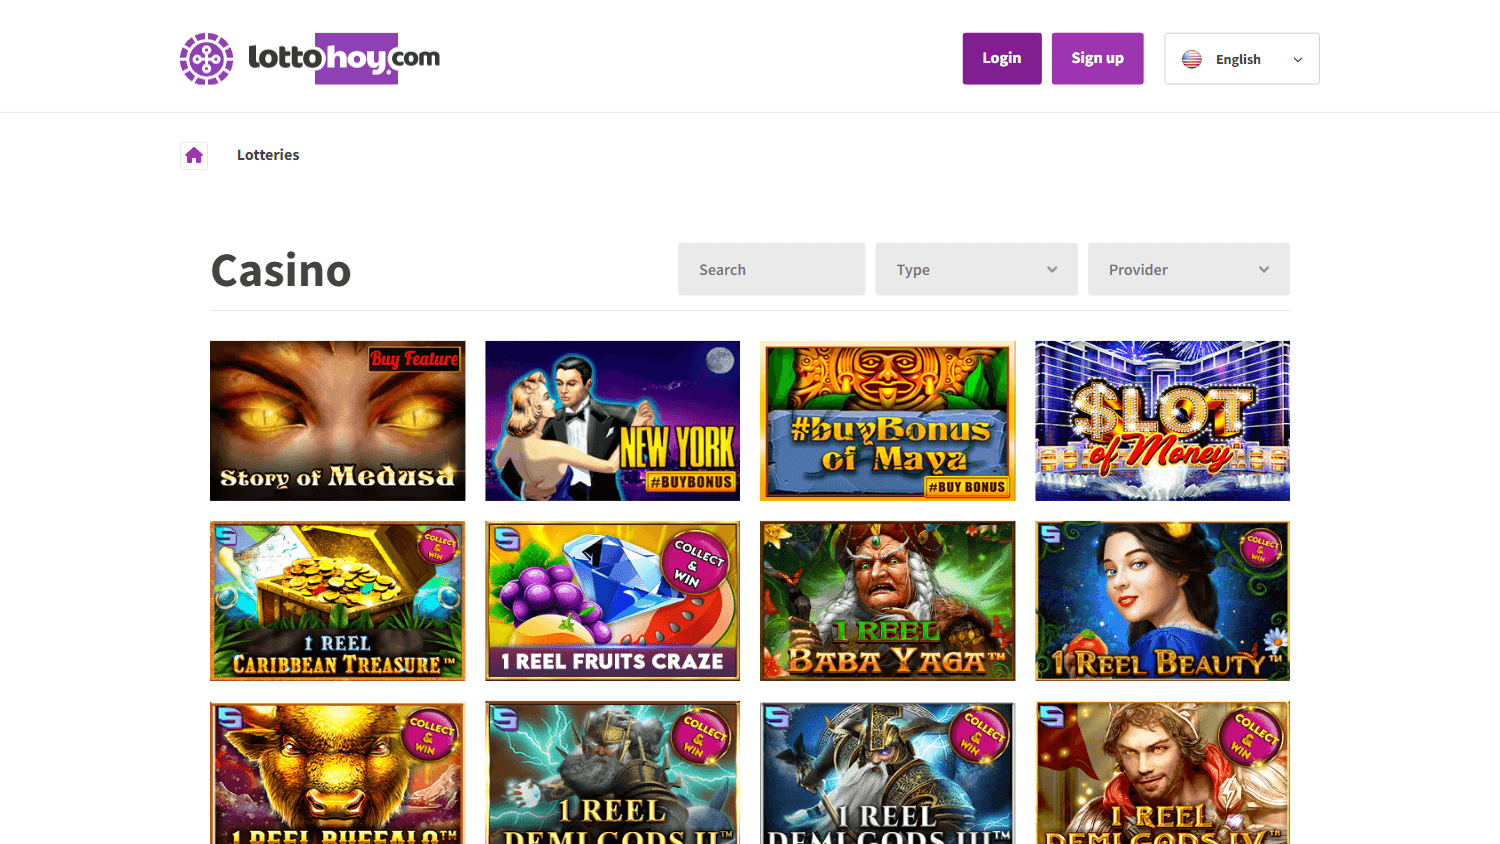 lottohoy_casino_game_gallery_desktop